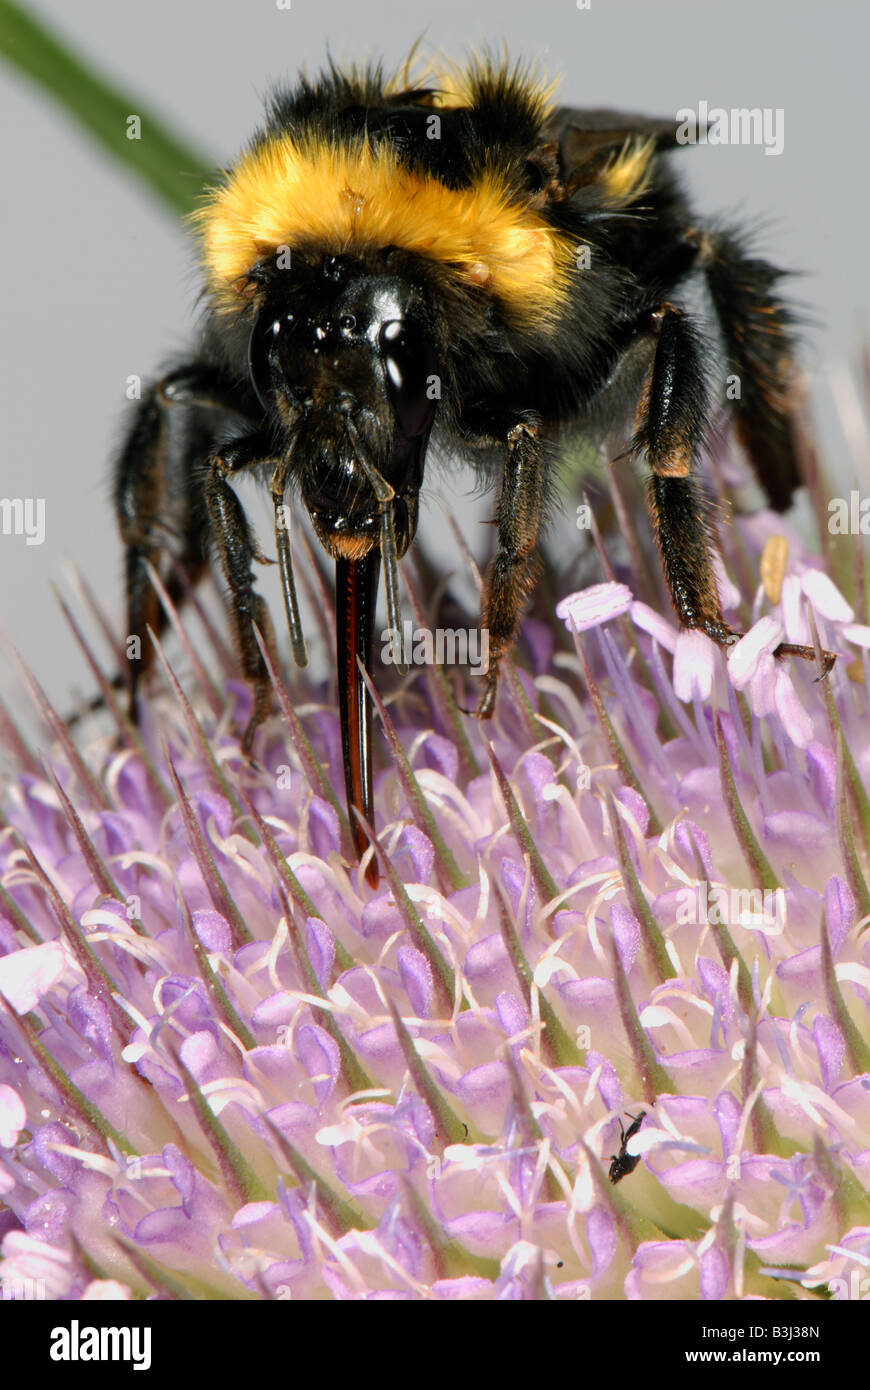 Garden bumblebee Bombus hortorum feeding on nectar from teasel flowers Stock Photo